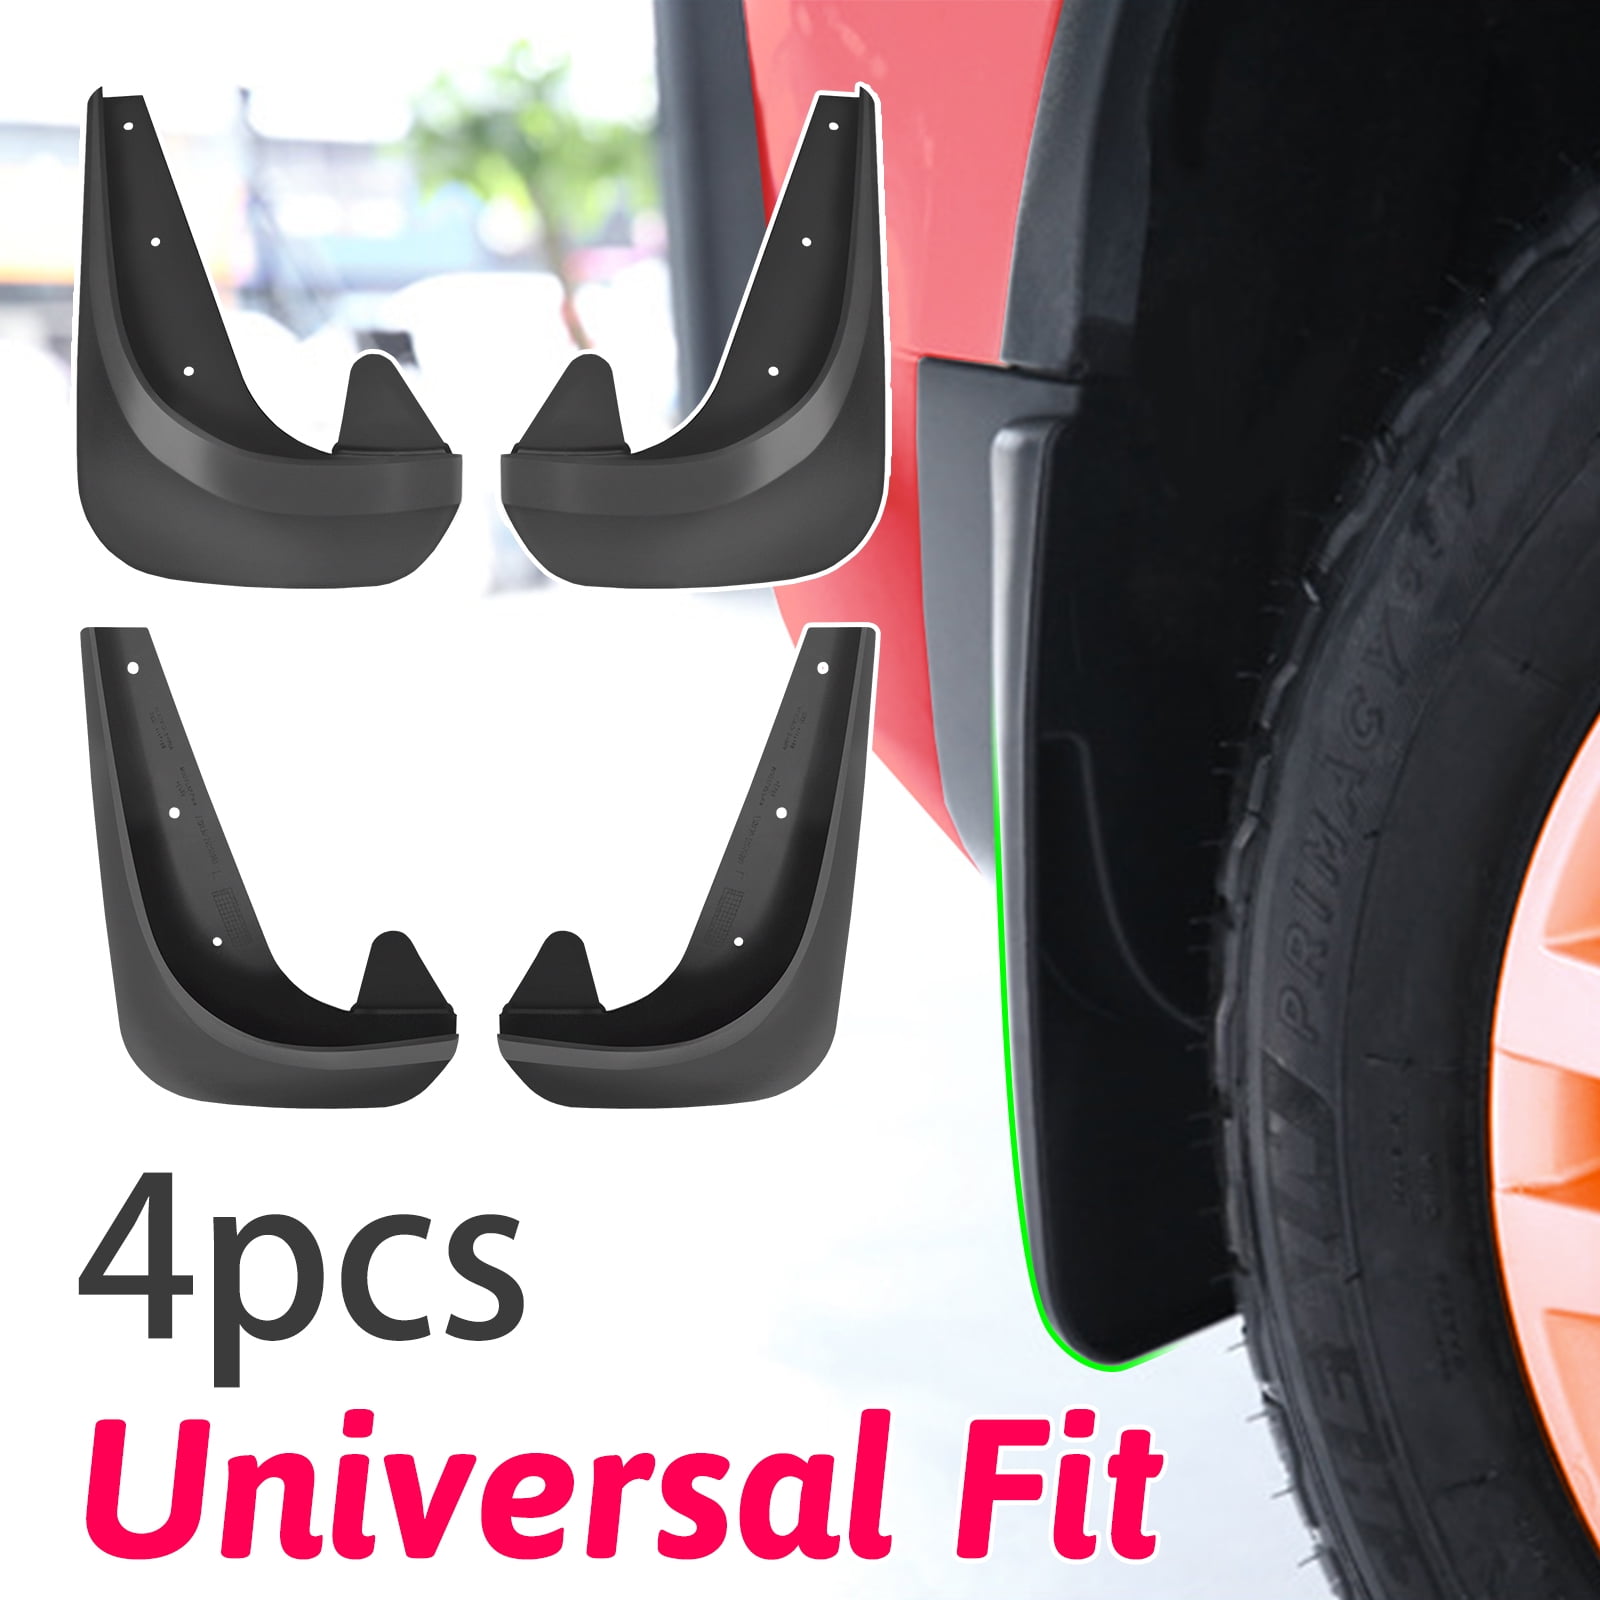 4pcs Universal Car Front and Rear Fenders, EEEkit Car Mud Flaps